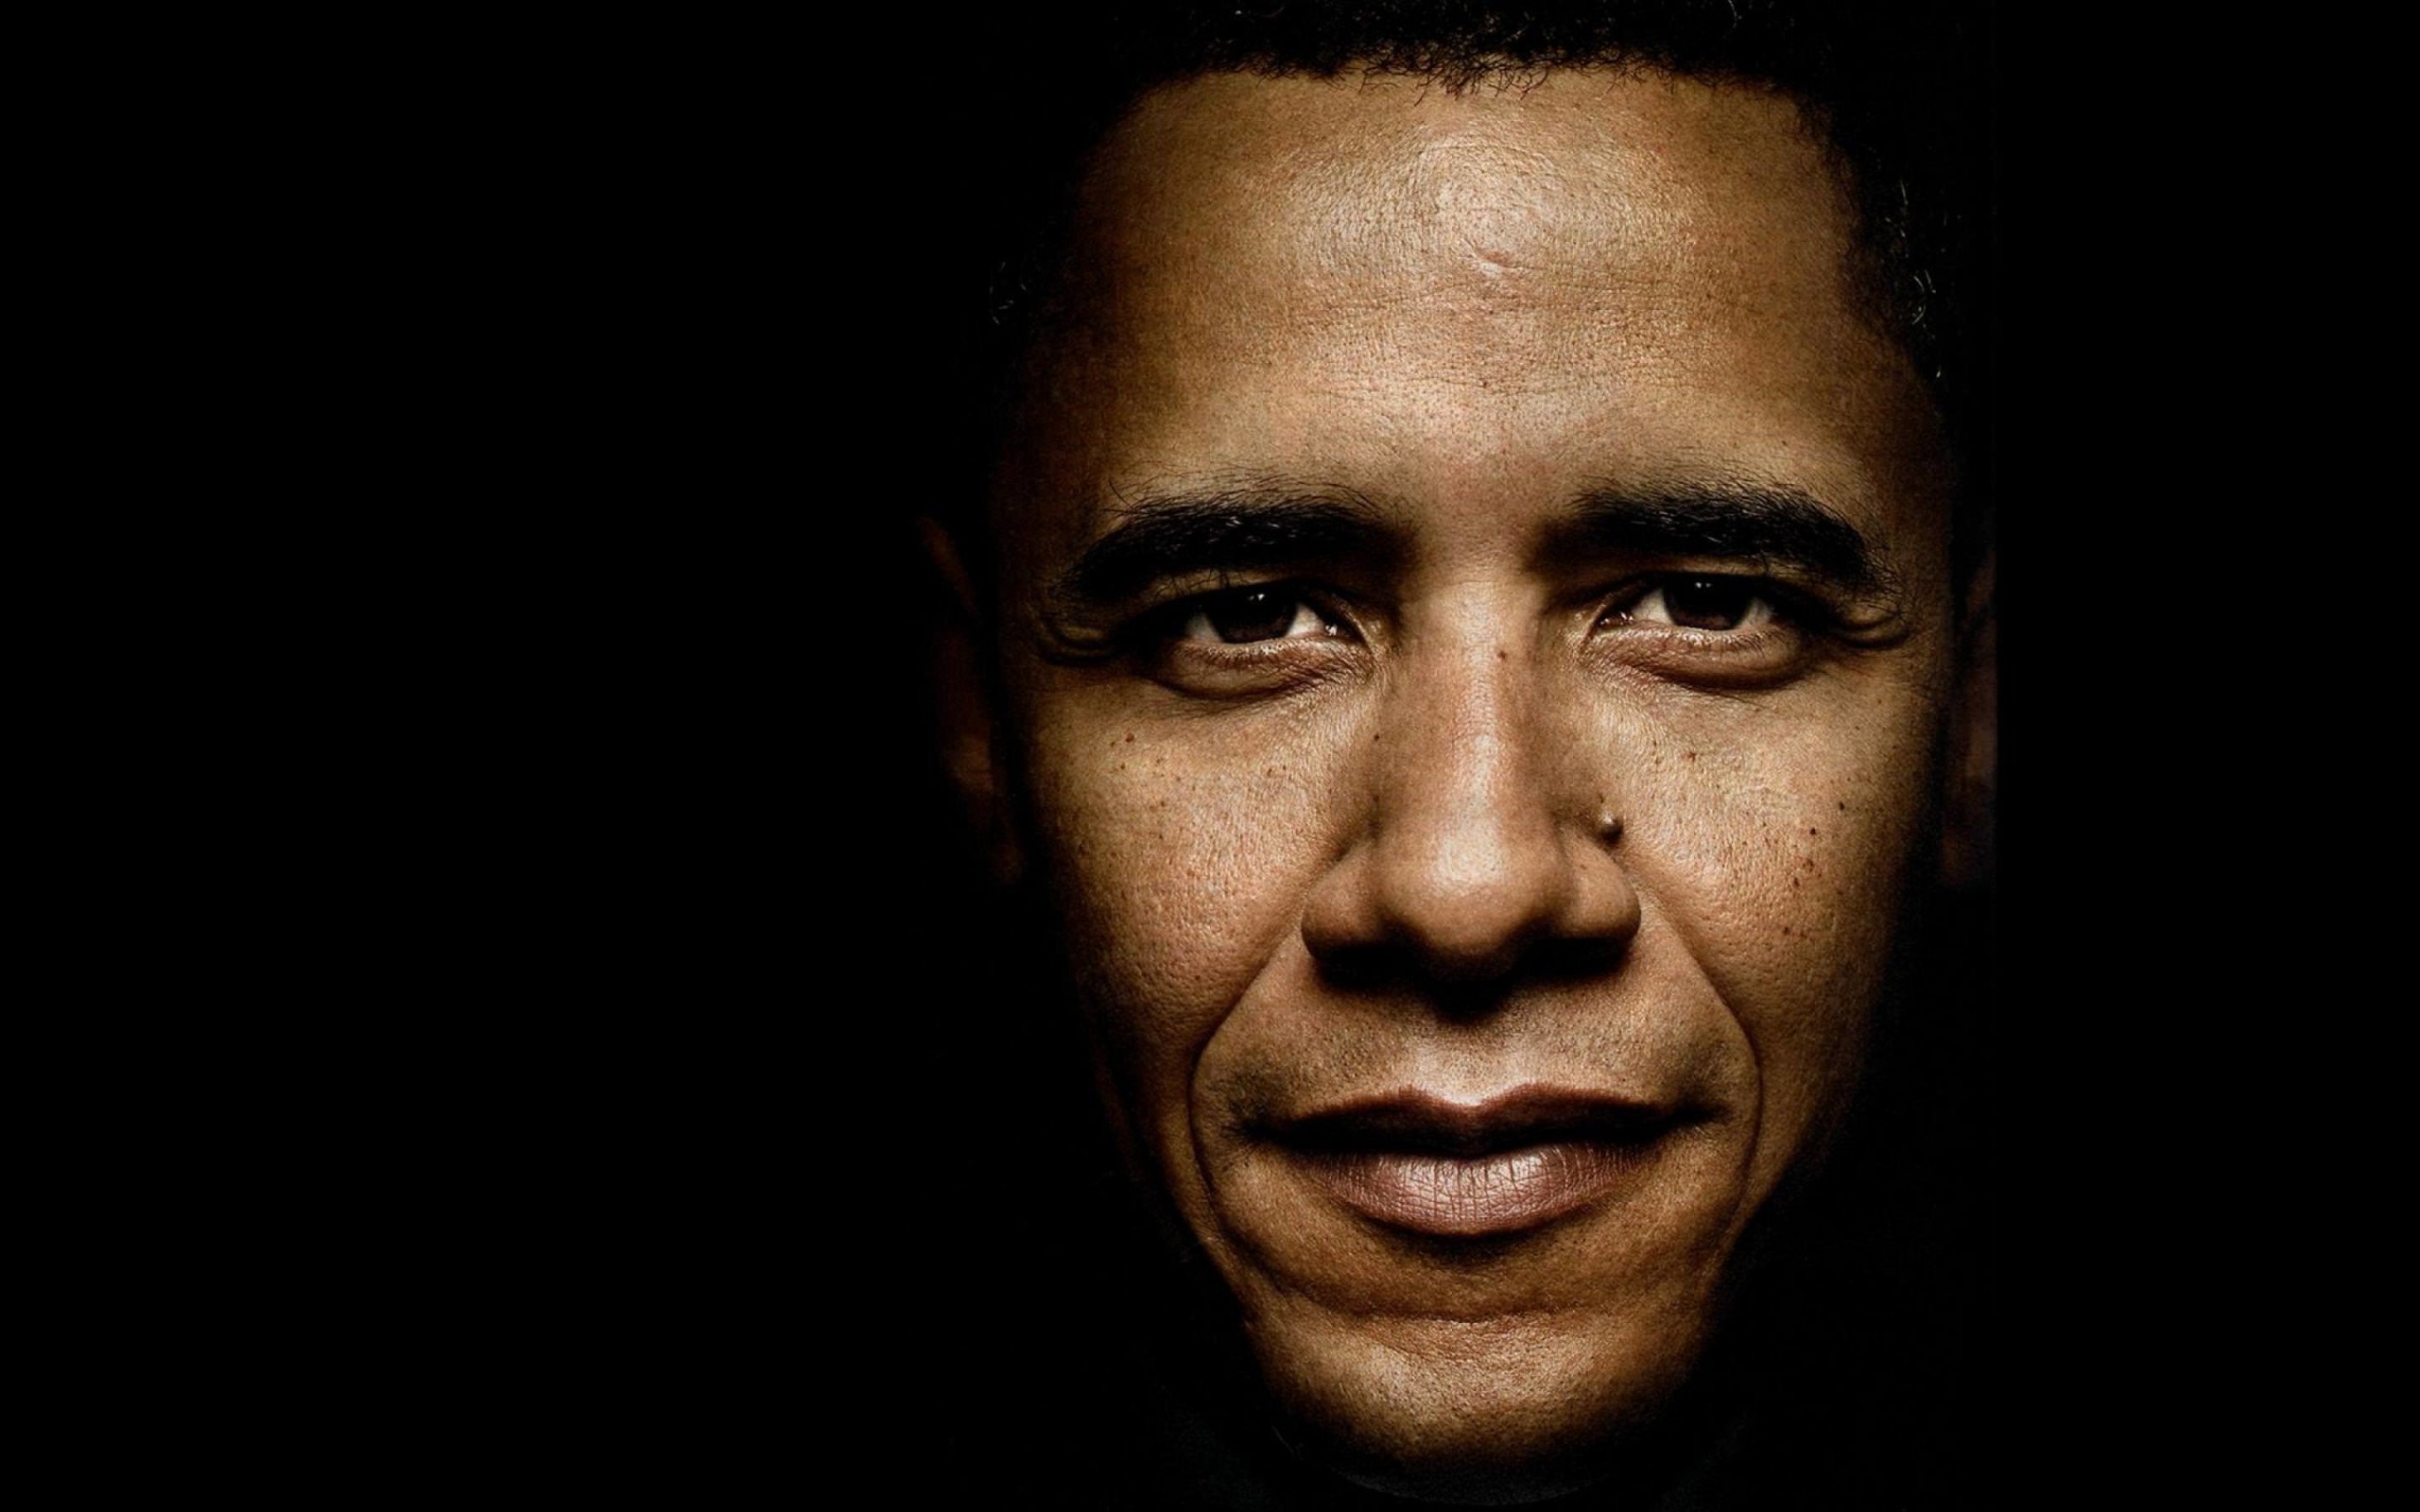 President Barack Obama Portrait Wallpaper for Desktop 2560x1600